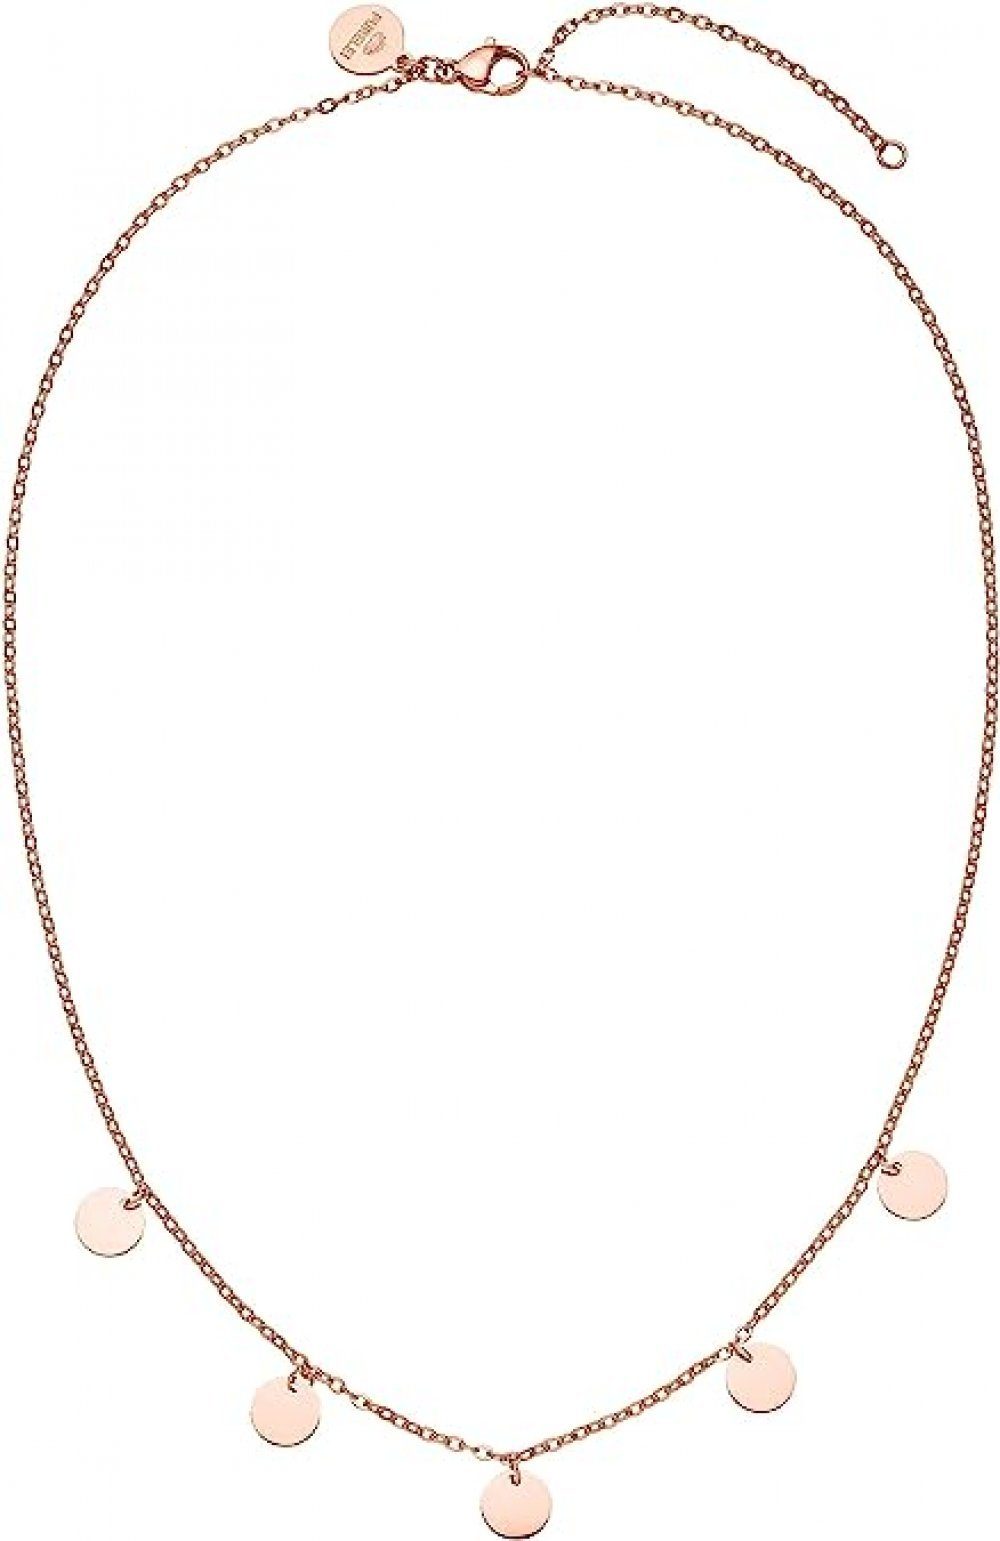 WaKuKa Charm-Kette Damen-Halskette, wasserfeste Kette aus 925er Silber Roségold